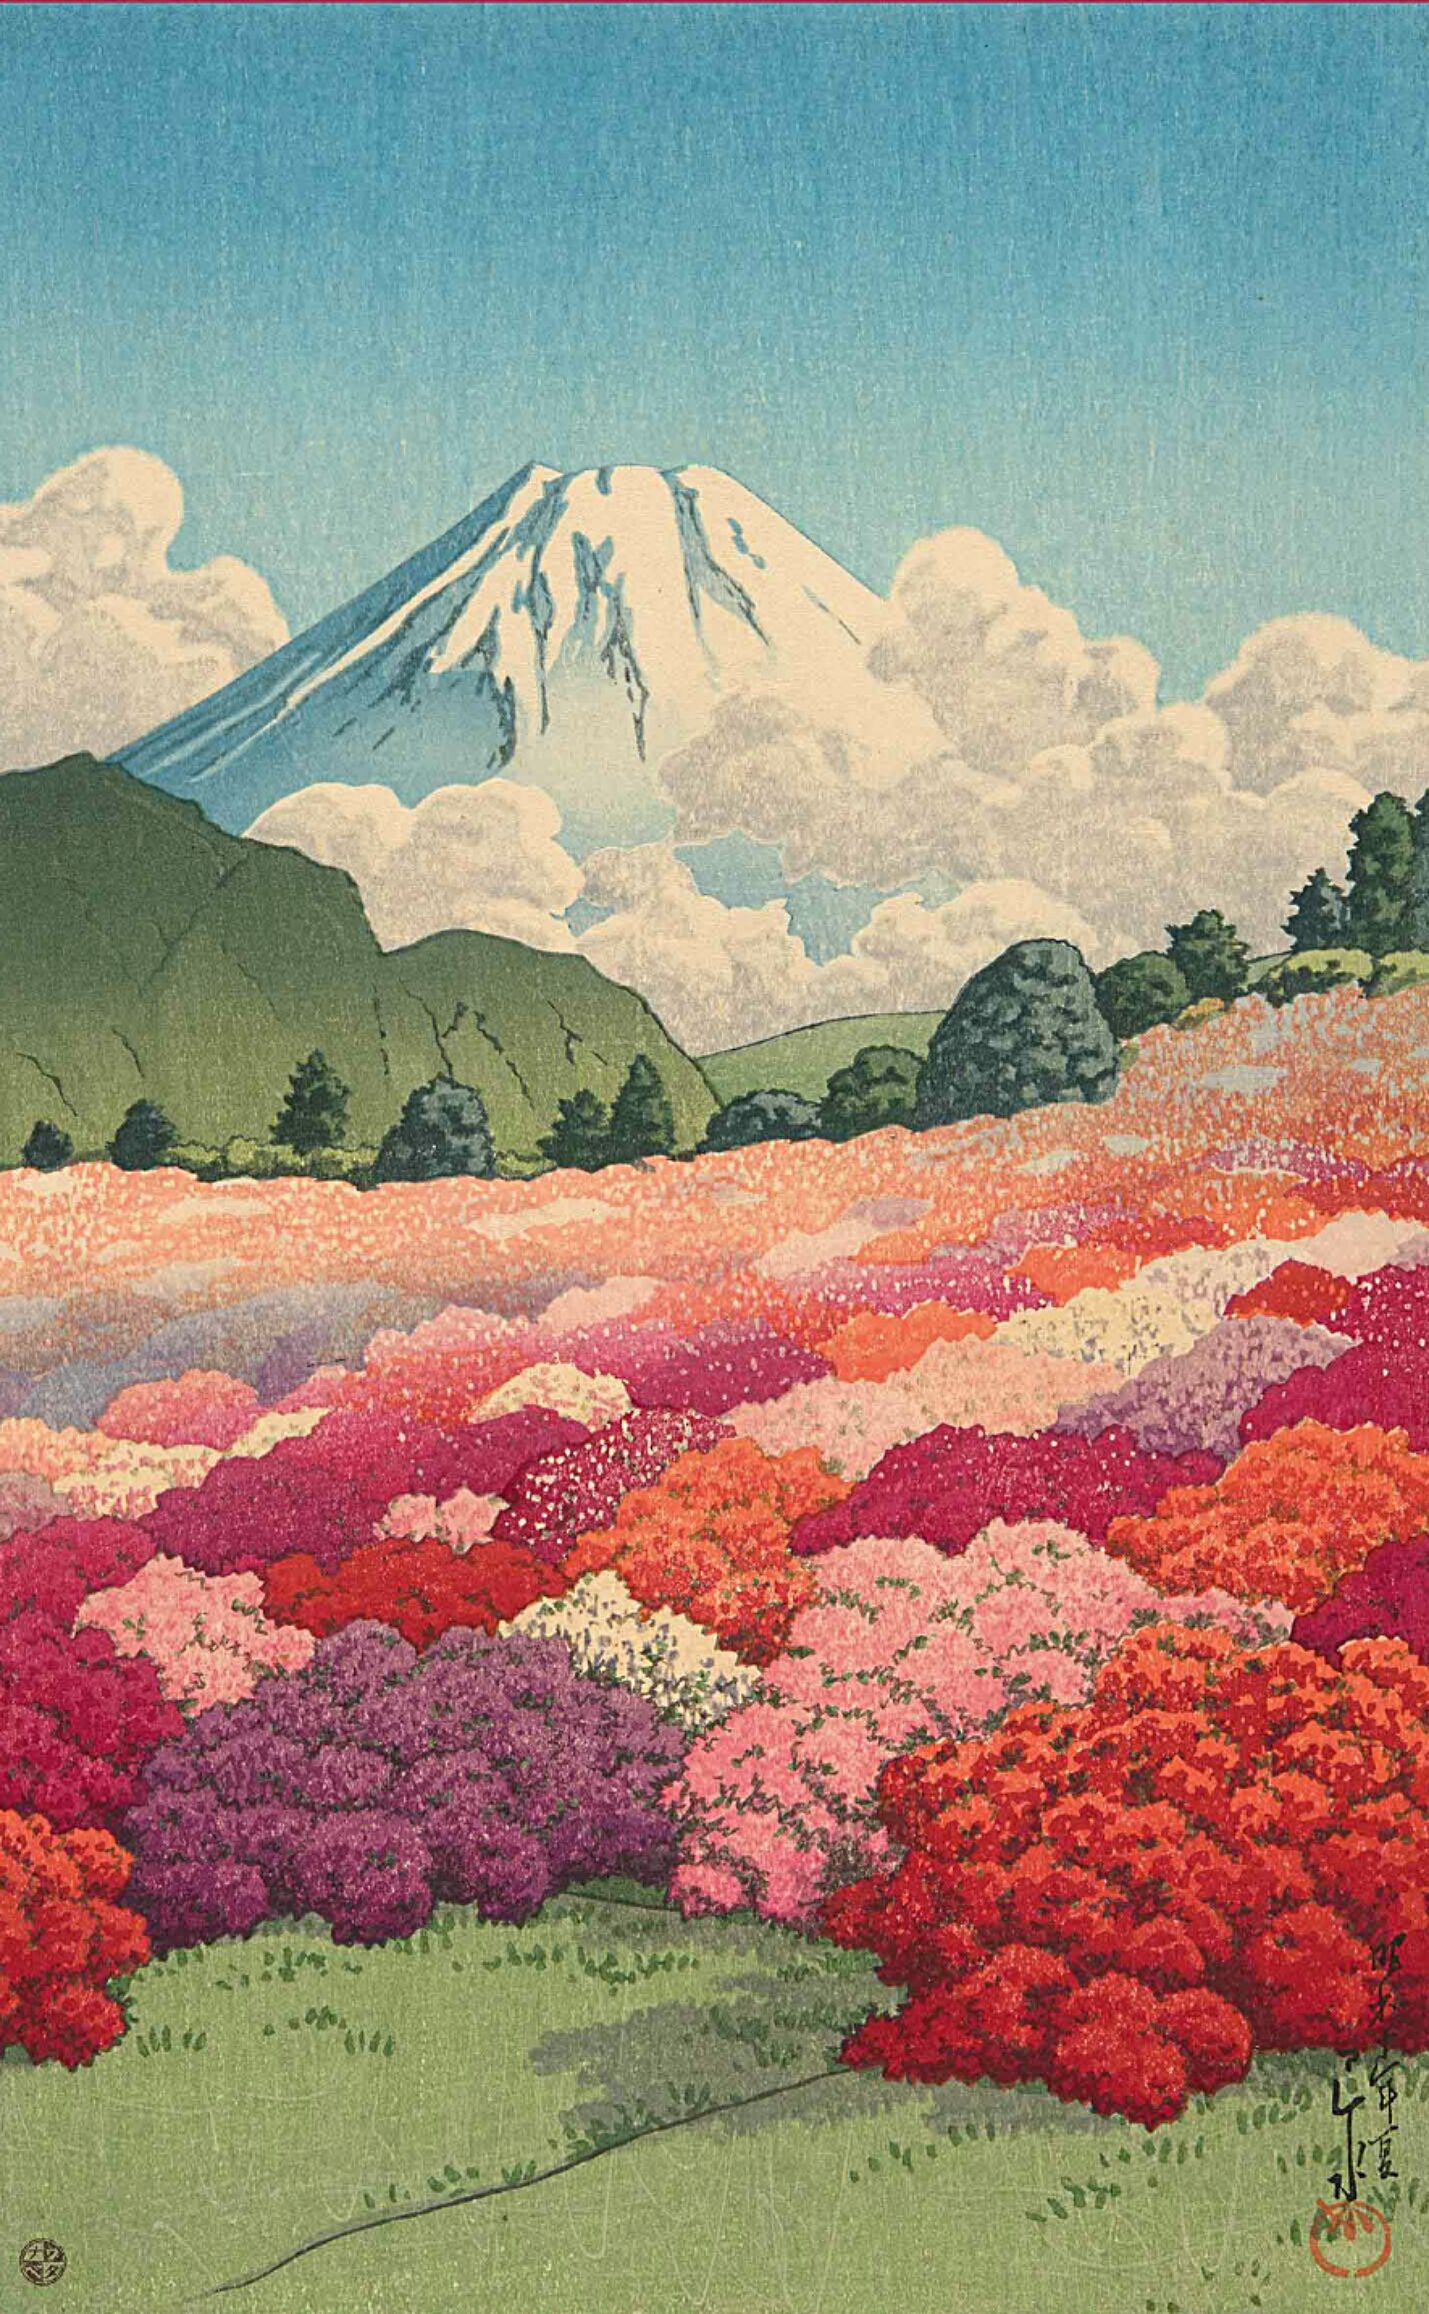 1429x2314 Looking at Mt. Fuji from the Azalea Garden, Japan, 1935, by Kawase Hasui. | Japanese art, Art wallpaper, Asian art